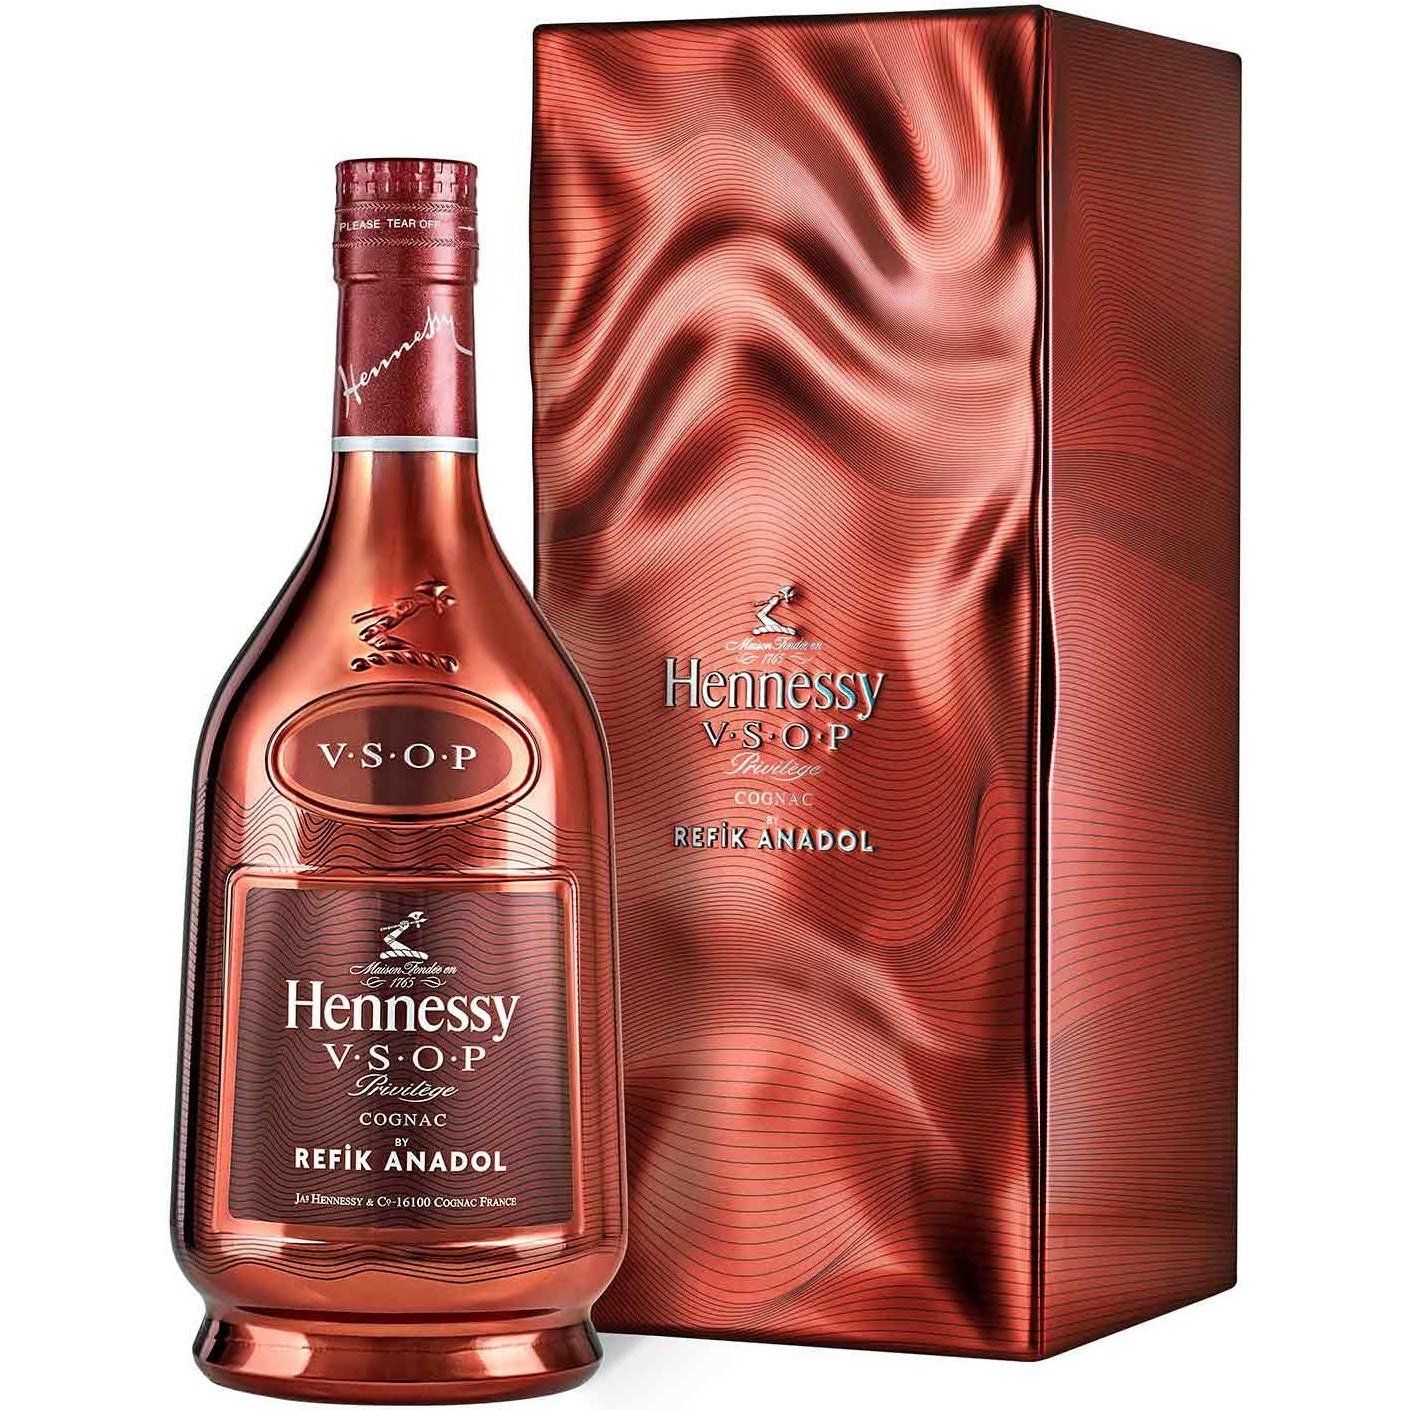 Hennessy VSOP Privilege Refik Anadol Limited Edition 750ml